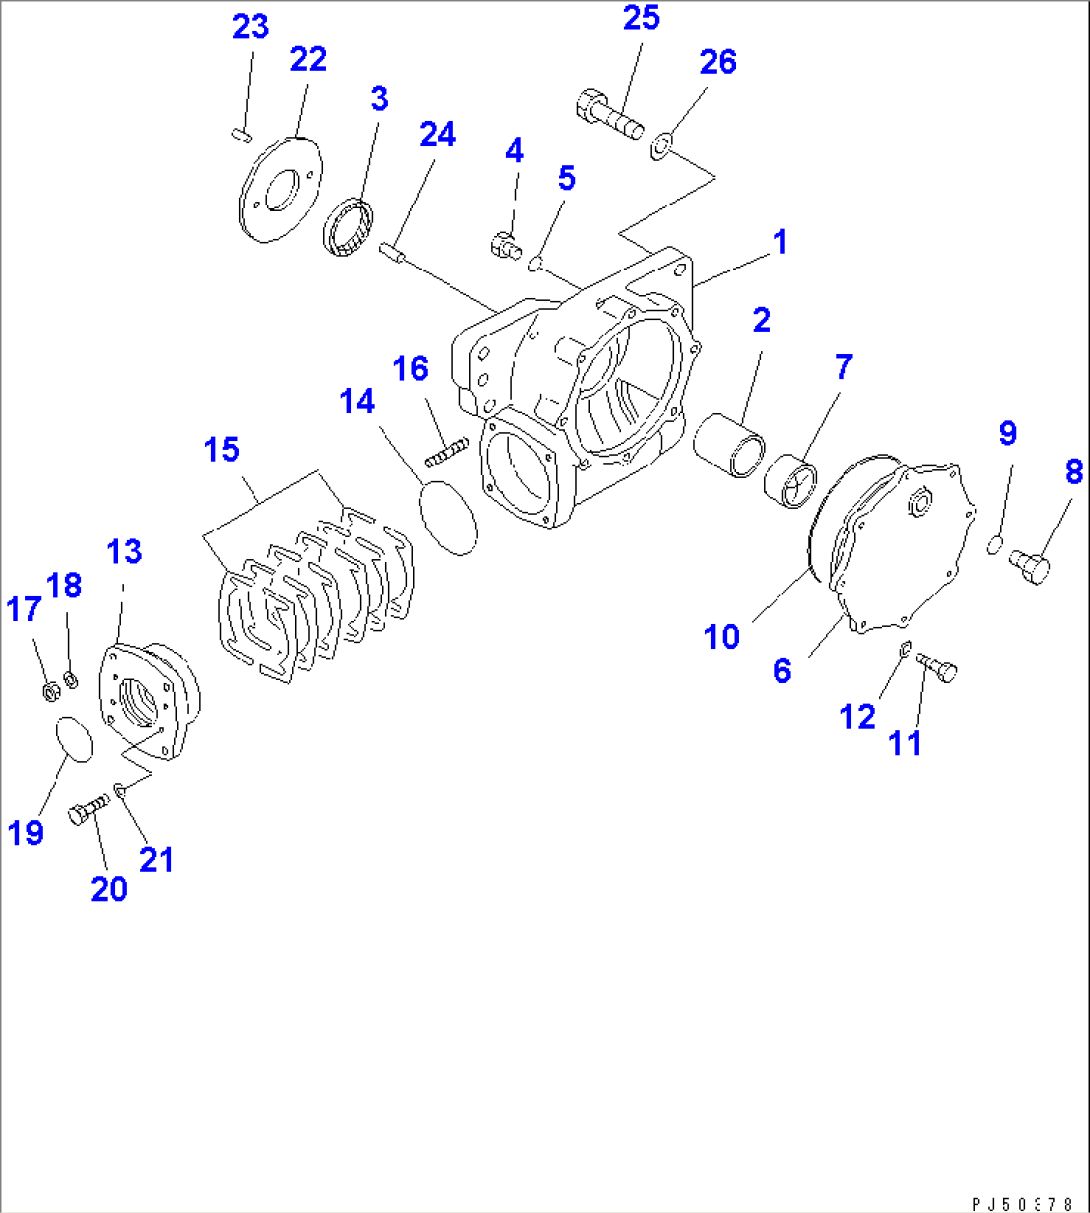 CIRCLE REVERSE GEAR (1/2)(#2001-2050)